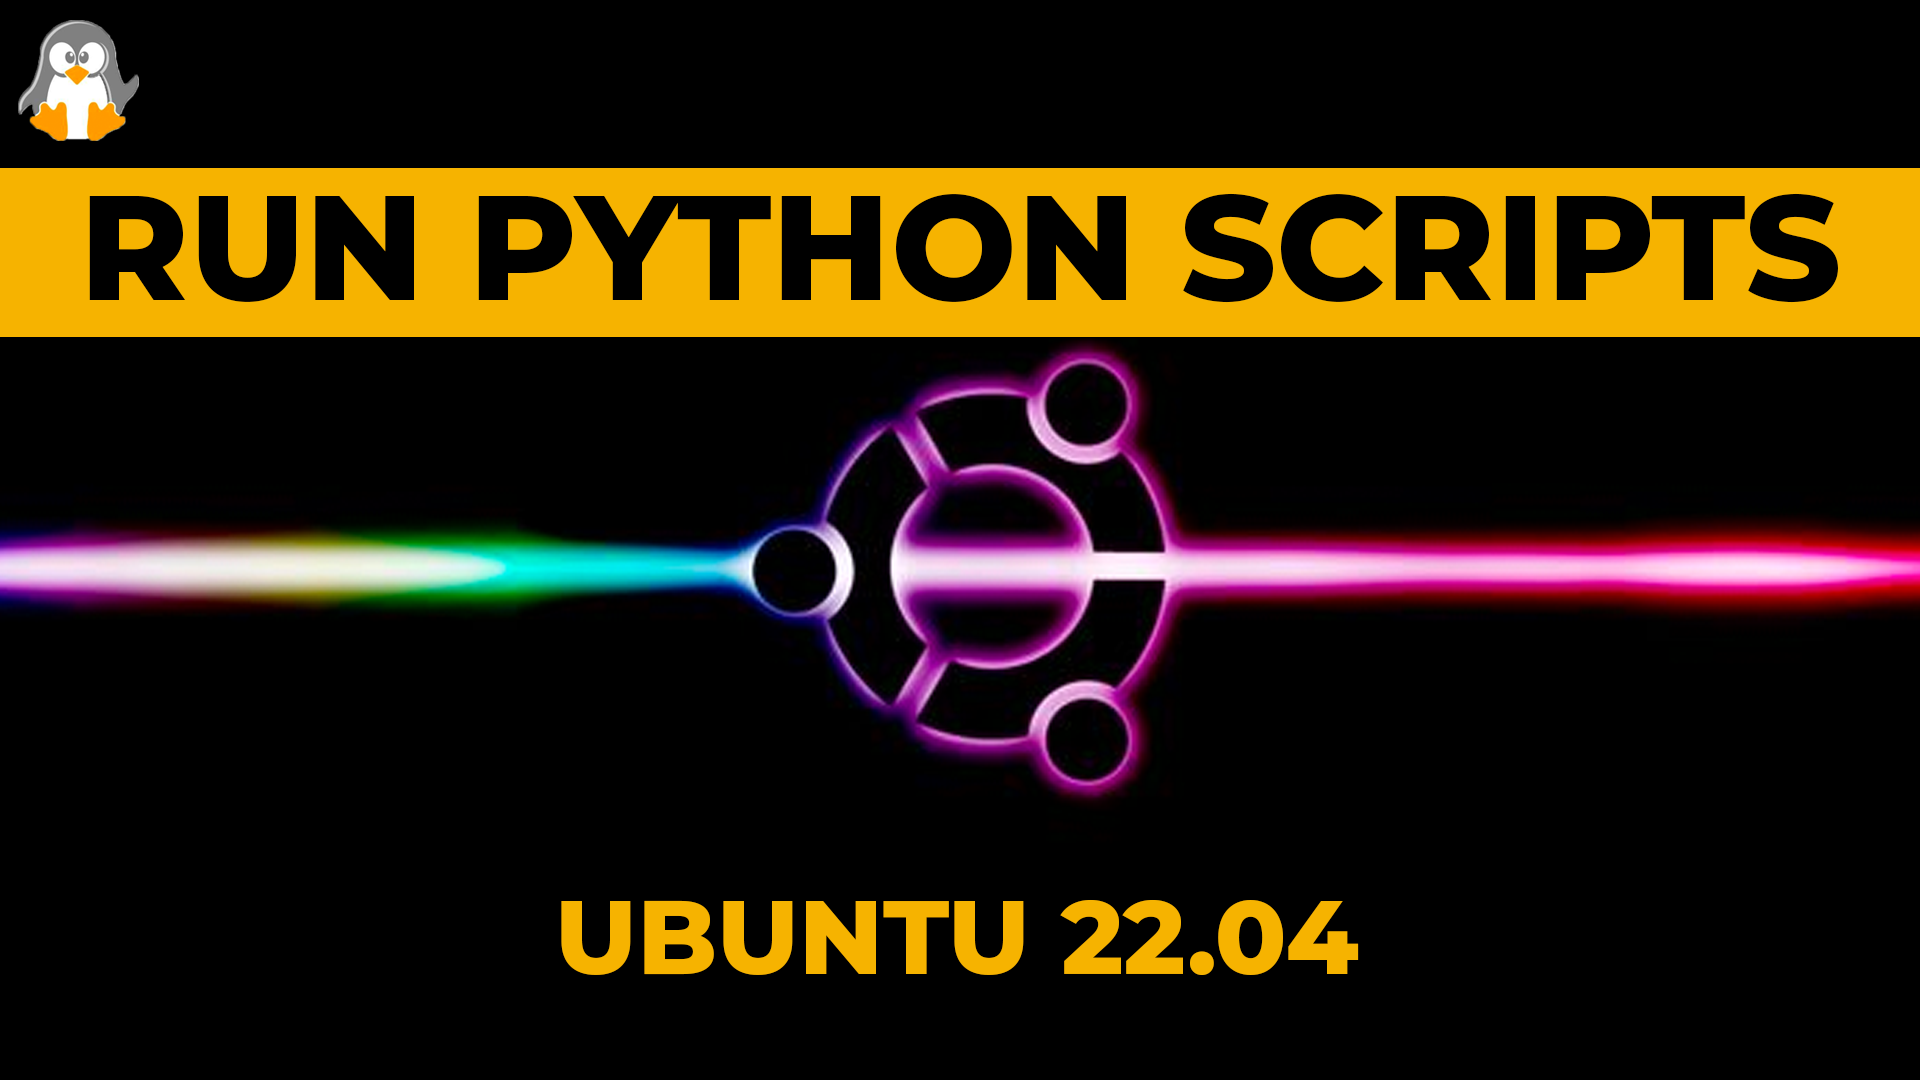 How to Run Python Scripts in Ubuntu 22.04?